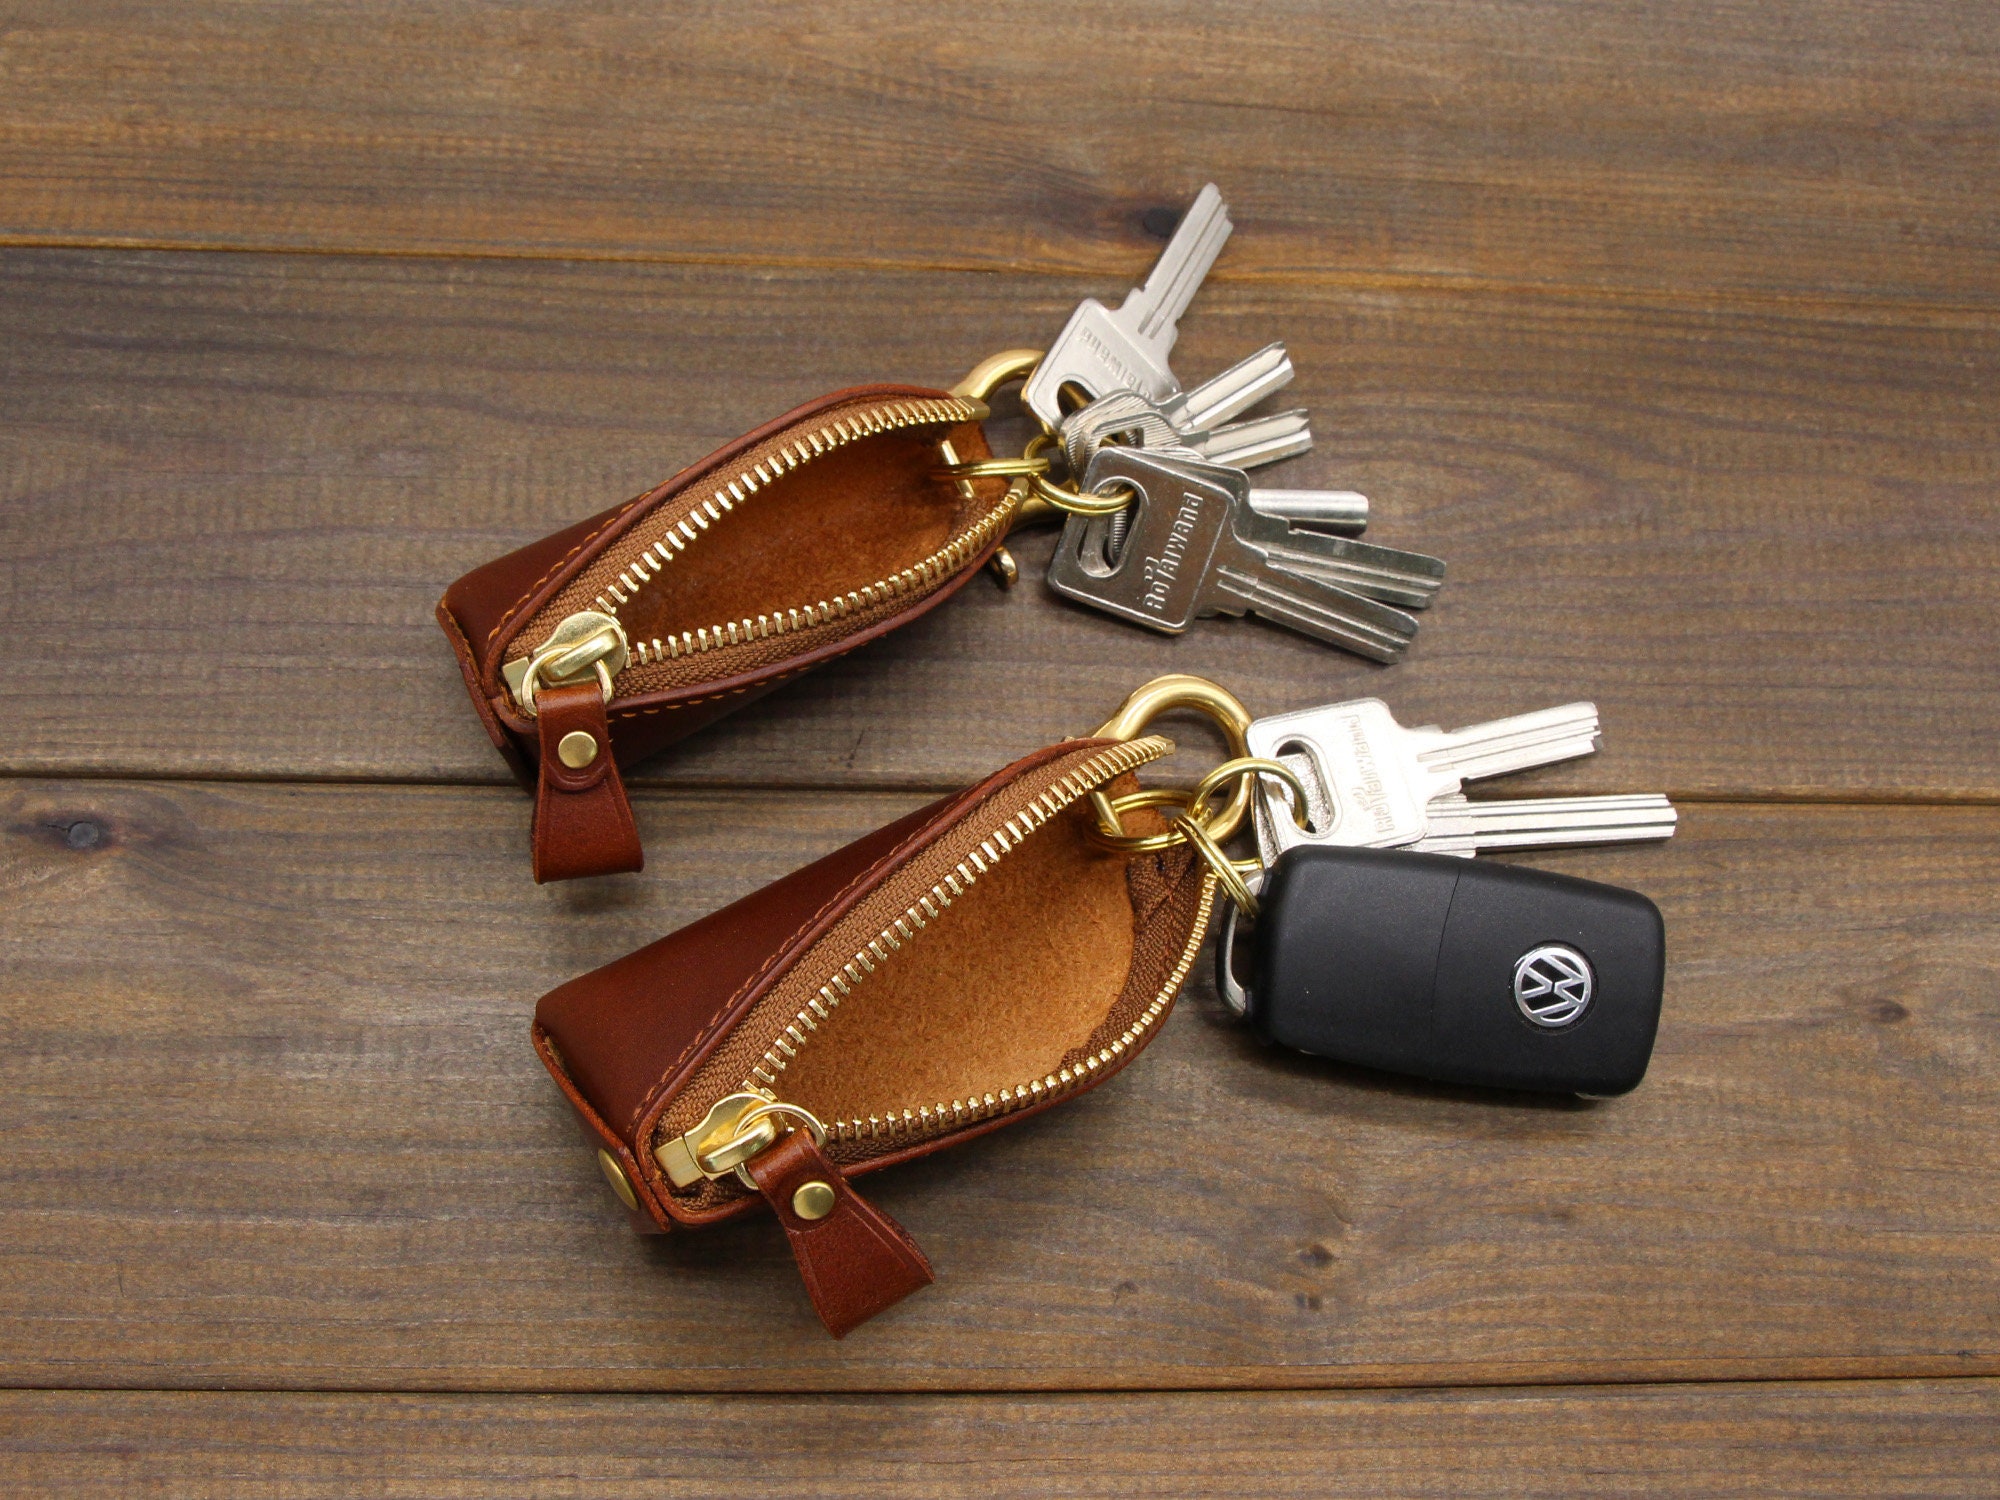 MuLier Car Key Case Leather Double Zipper Case Remote Wallet Bag Car Keychain Key Holder Black